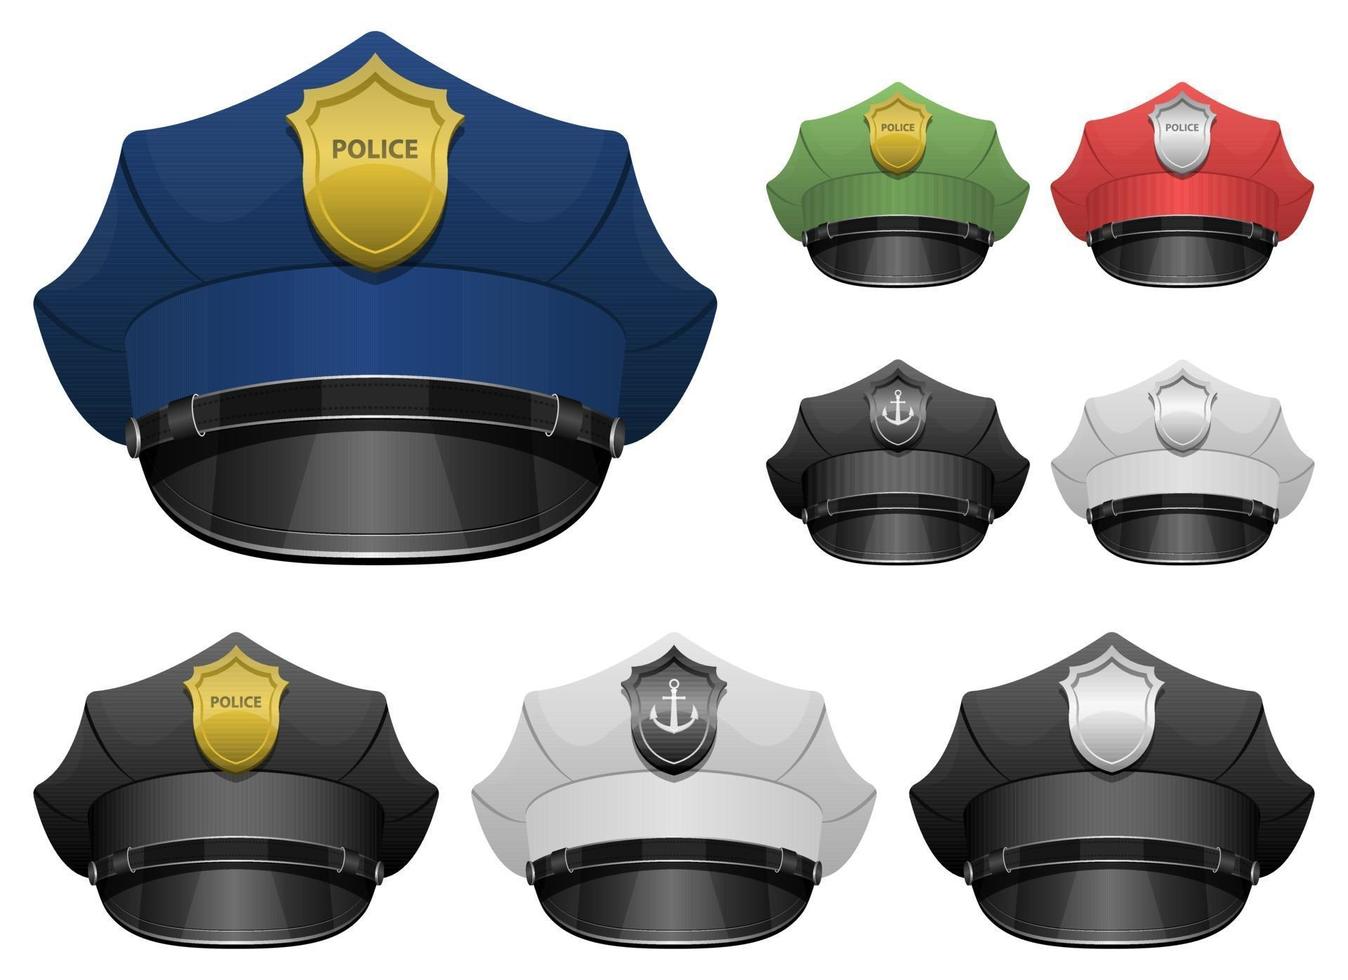 Police officer hat vector design illustration set isolated on white background